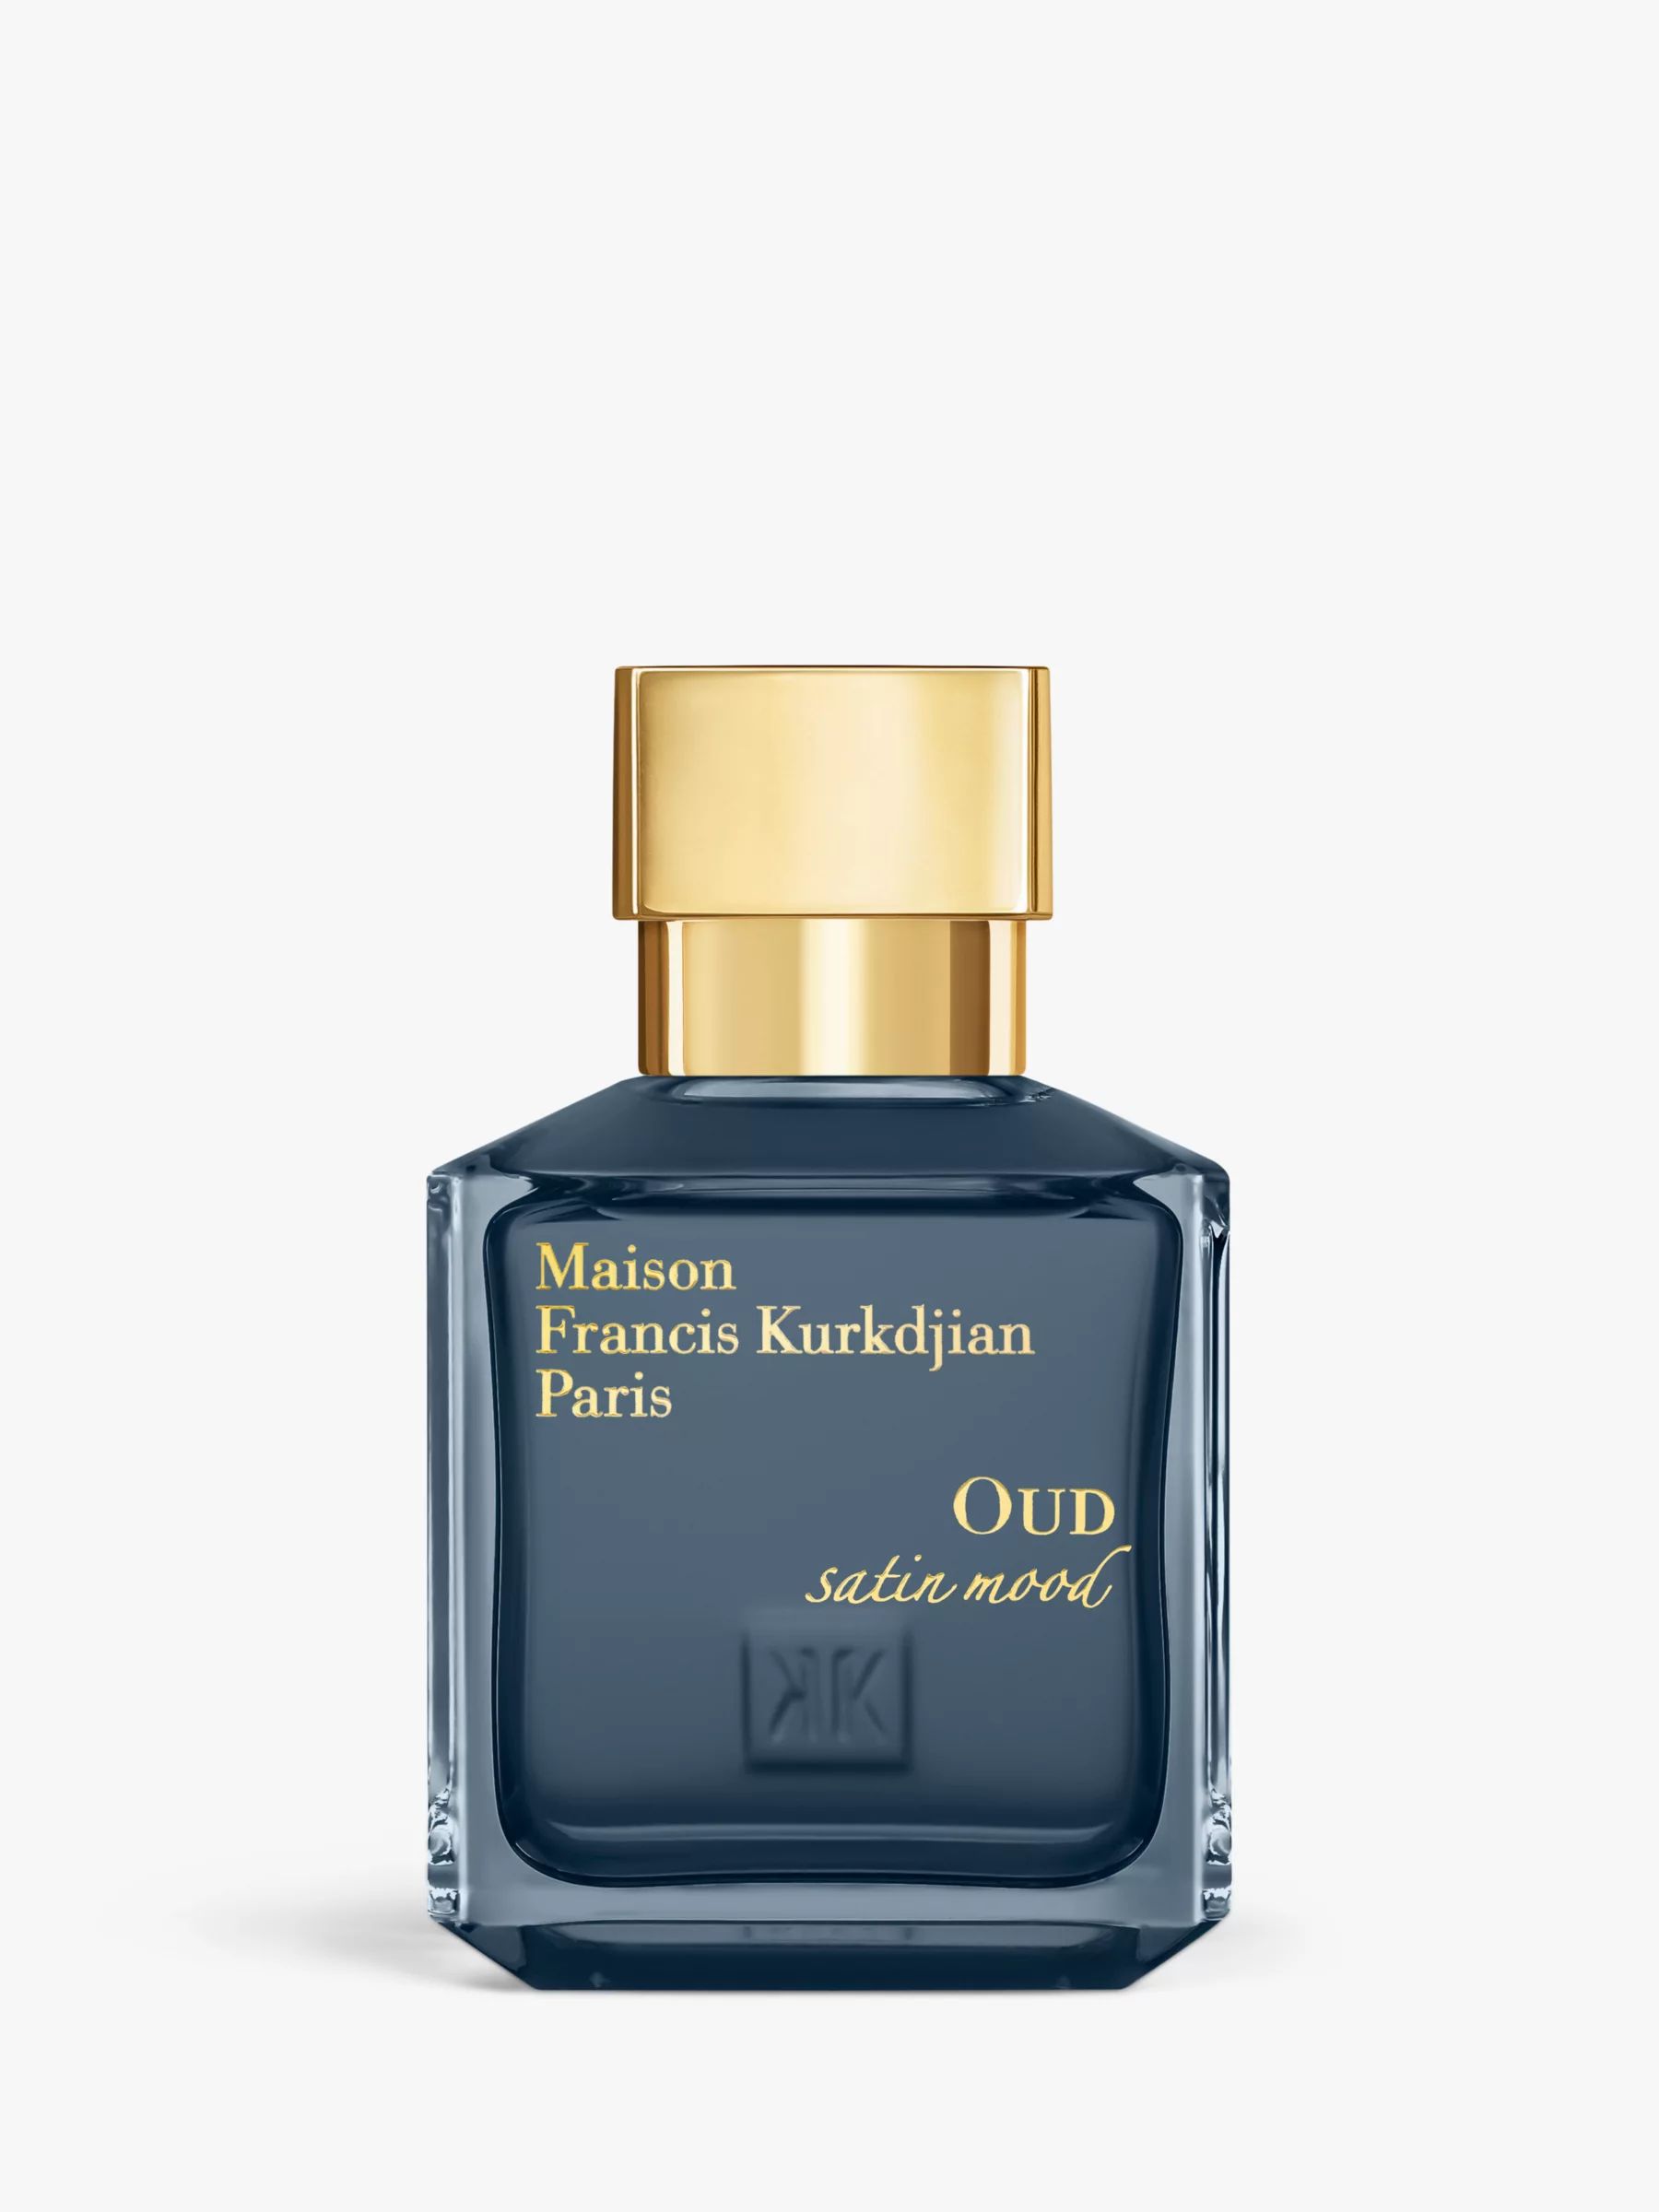 Maison Francis Kurkdjian Oud Satin Mood Eau de Parfum, 70ml | John Lewis (UK)